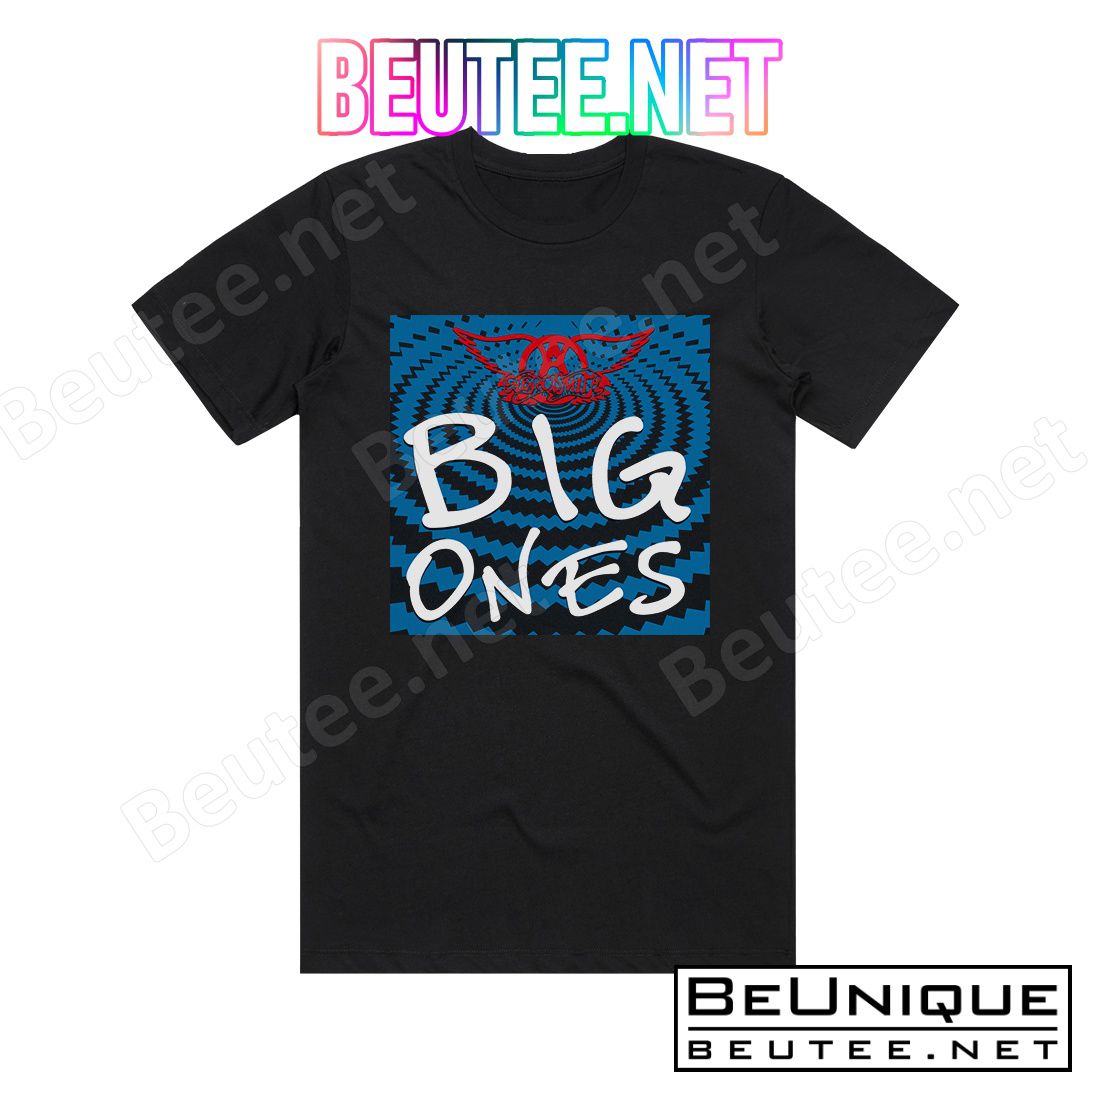 Aerosmith Big Ones Album Cover T-shirt